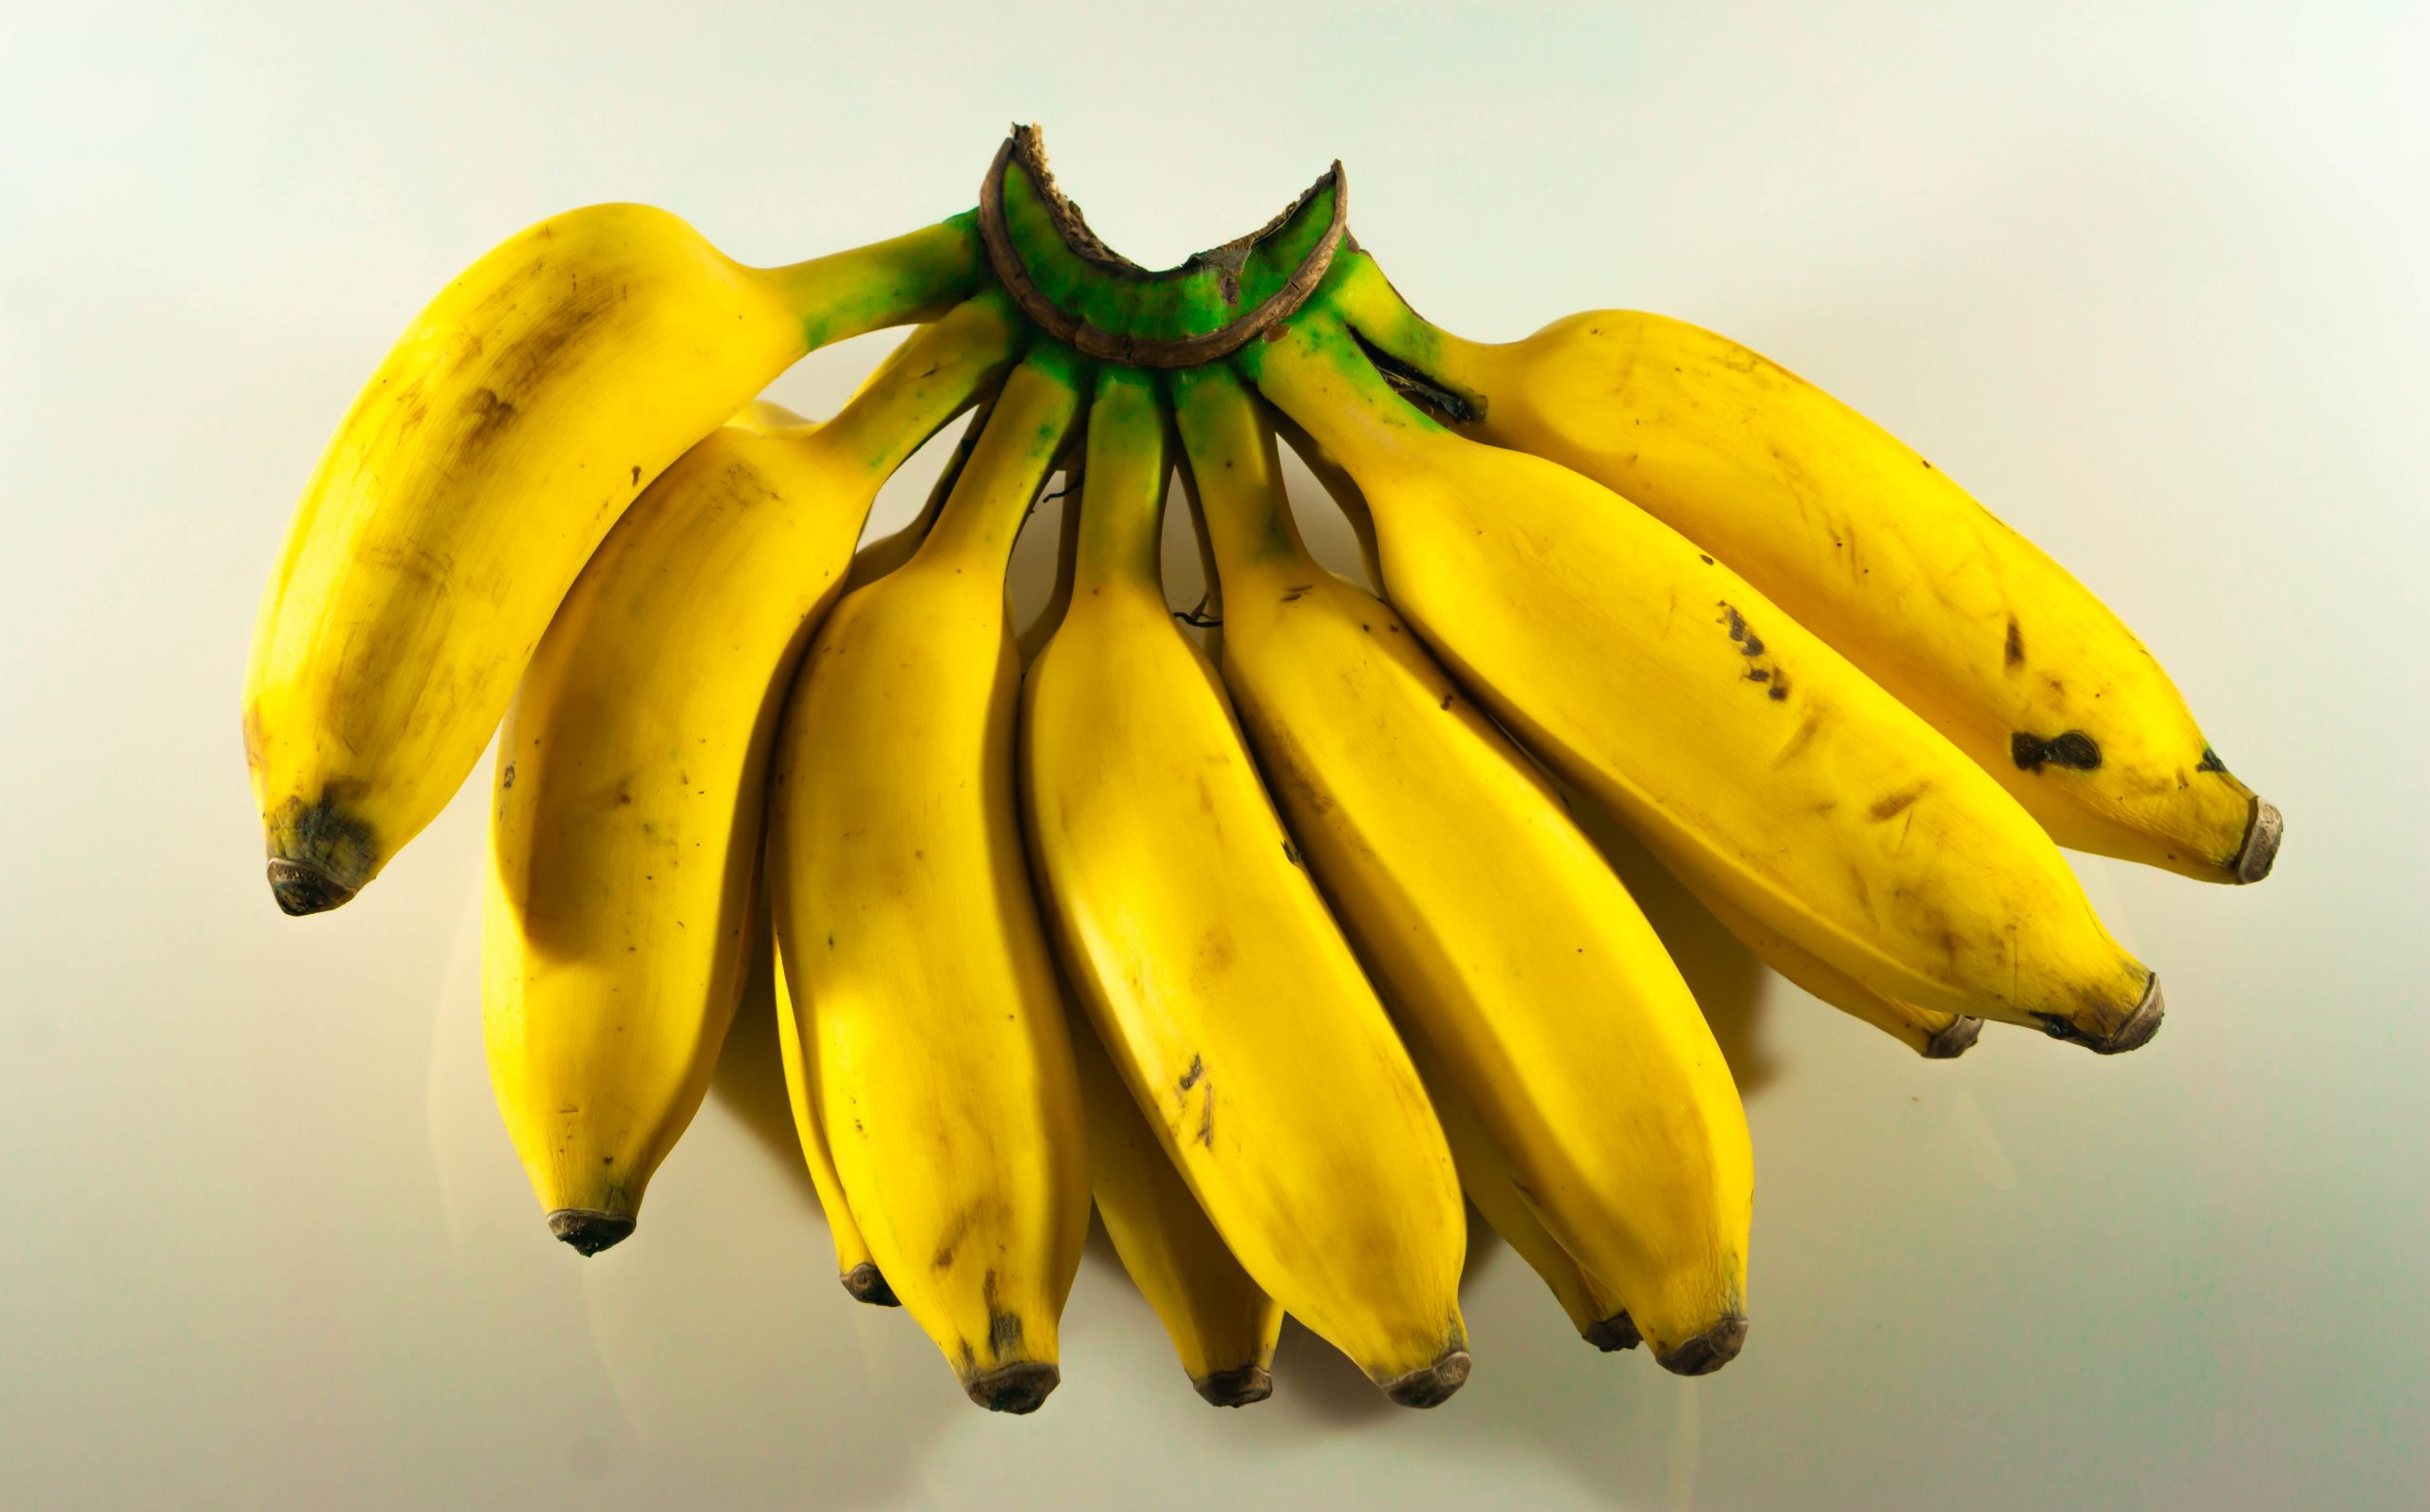 Banana fruit bunch on a light background